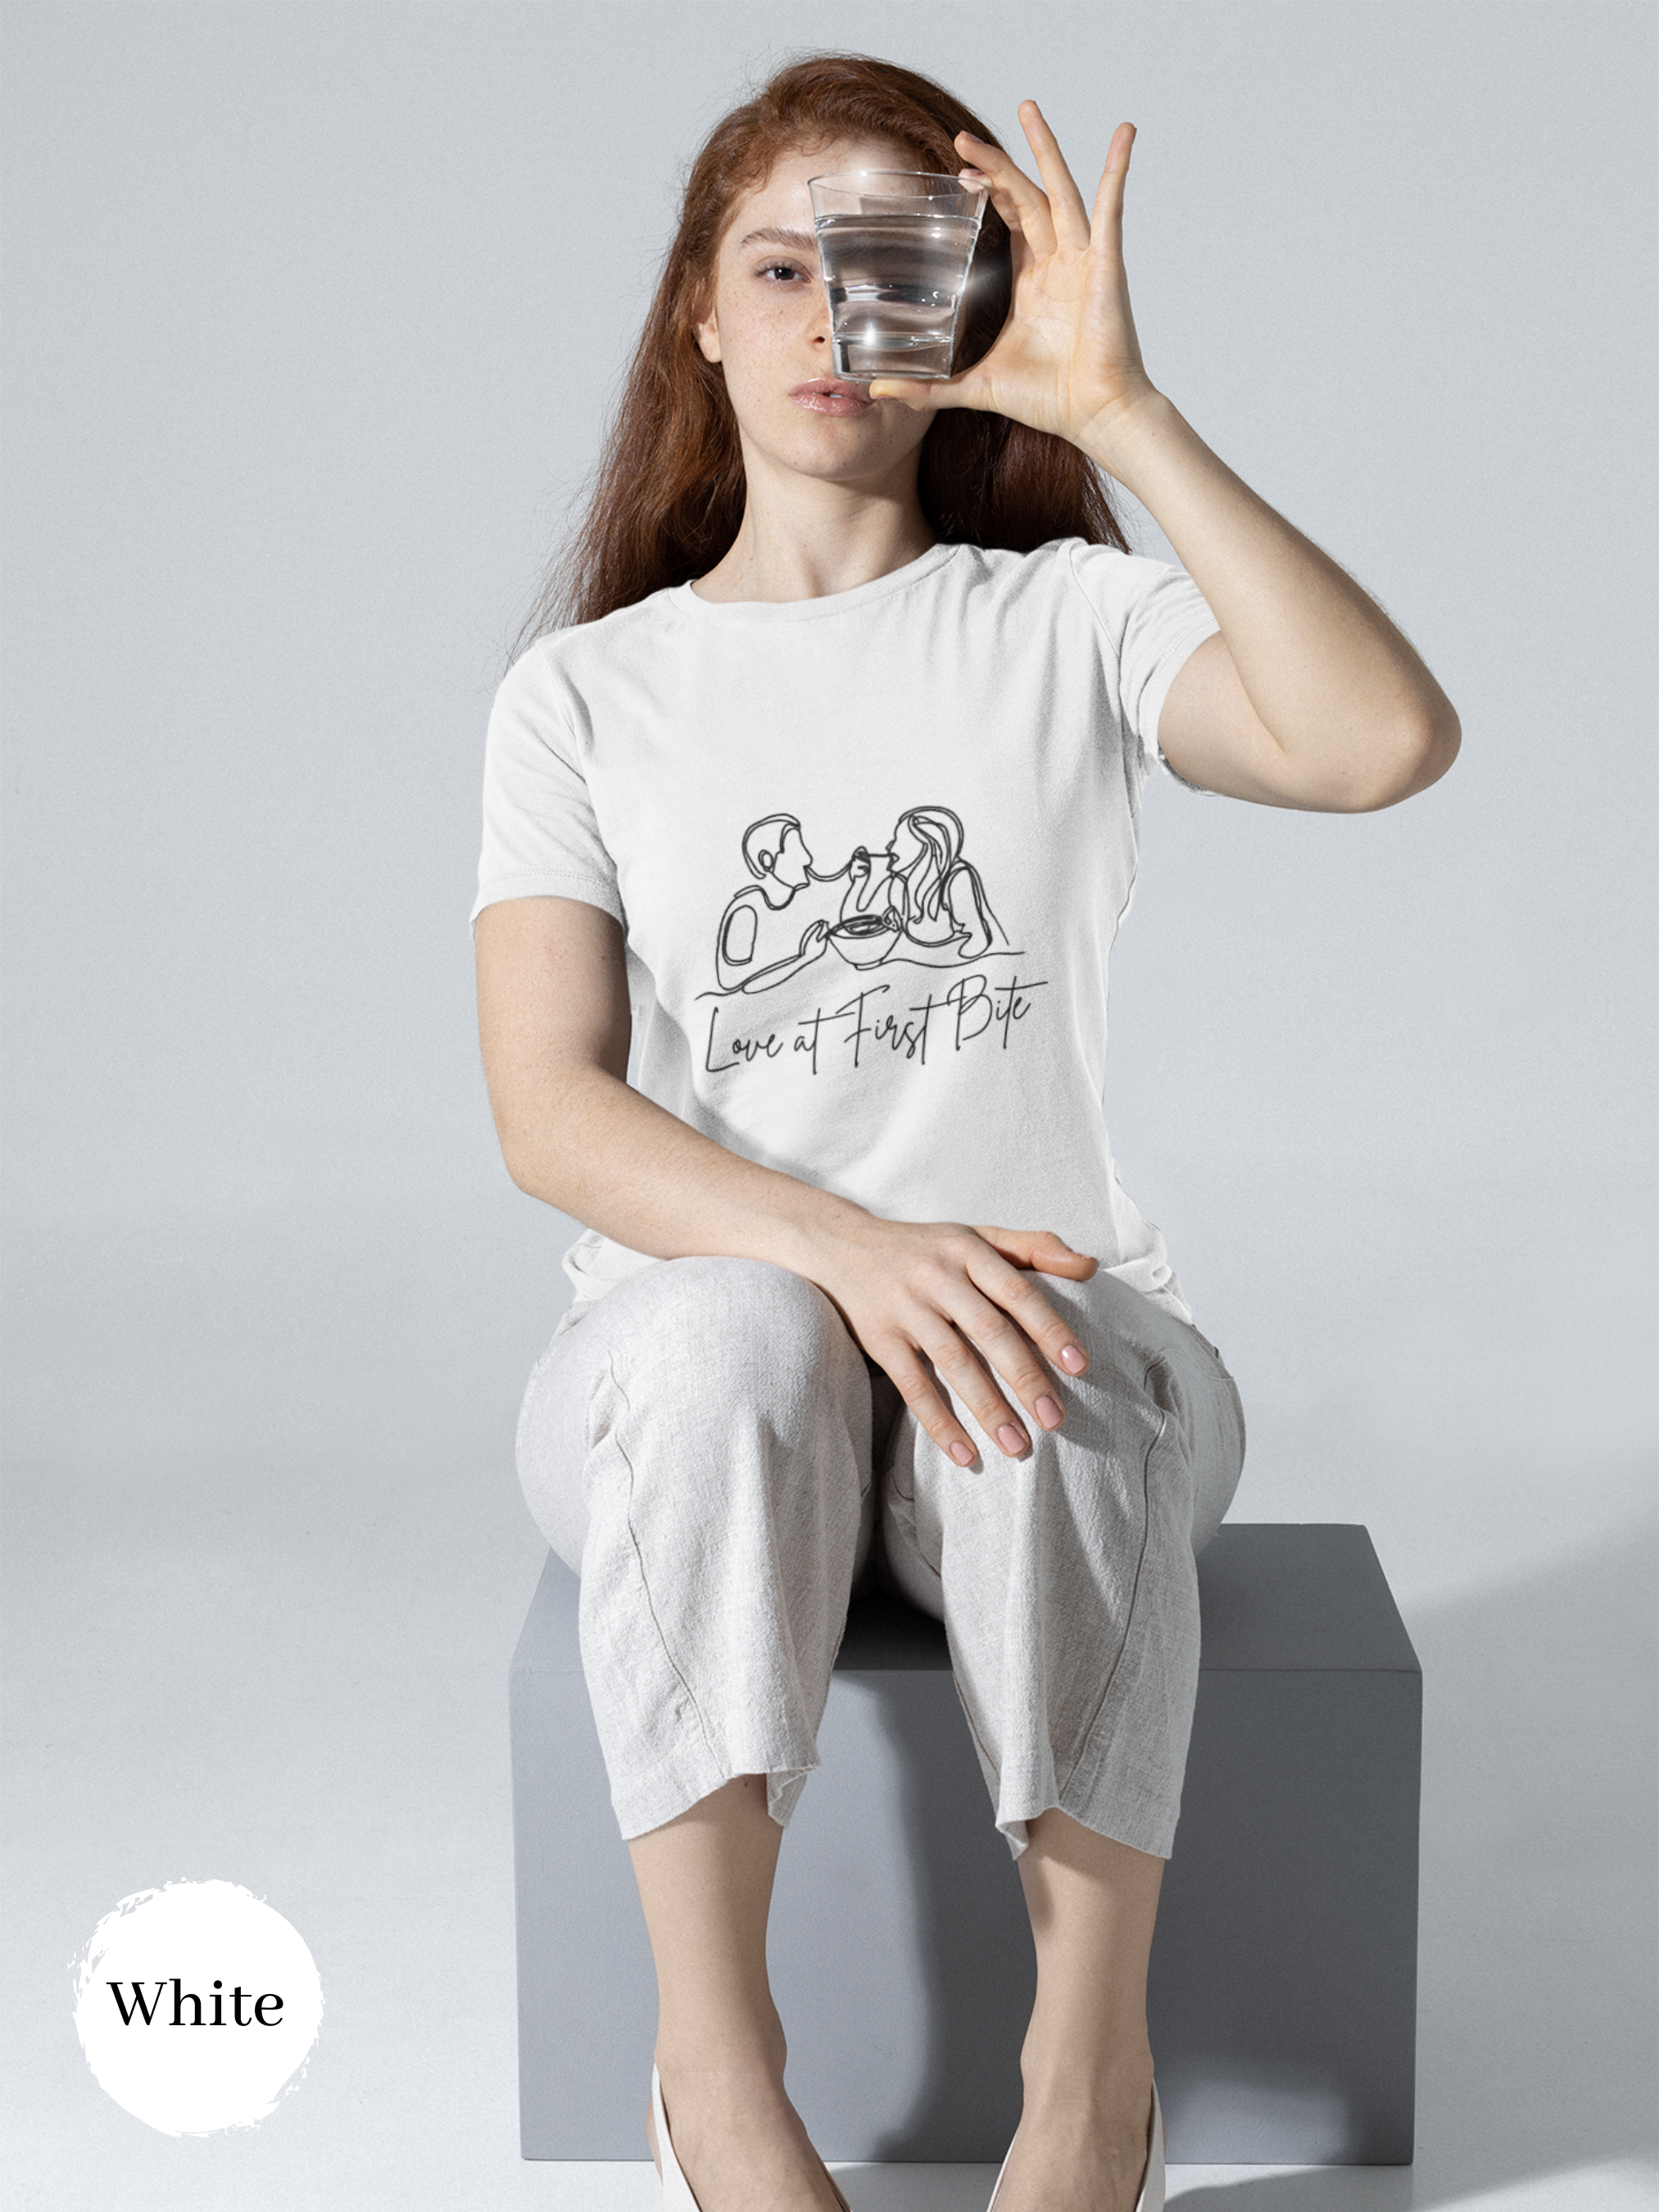 Ramen T-shirt: Japanese Shirt with Foodie Ramen Art Featuring a Couple Together